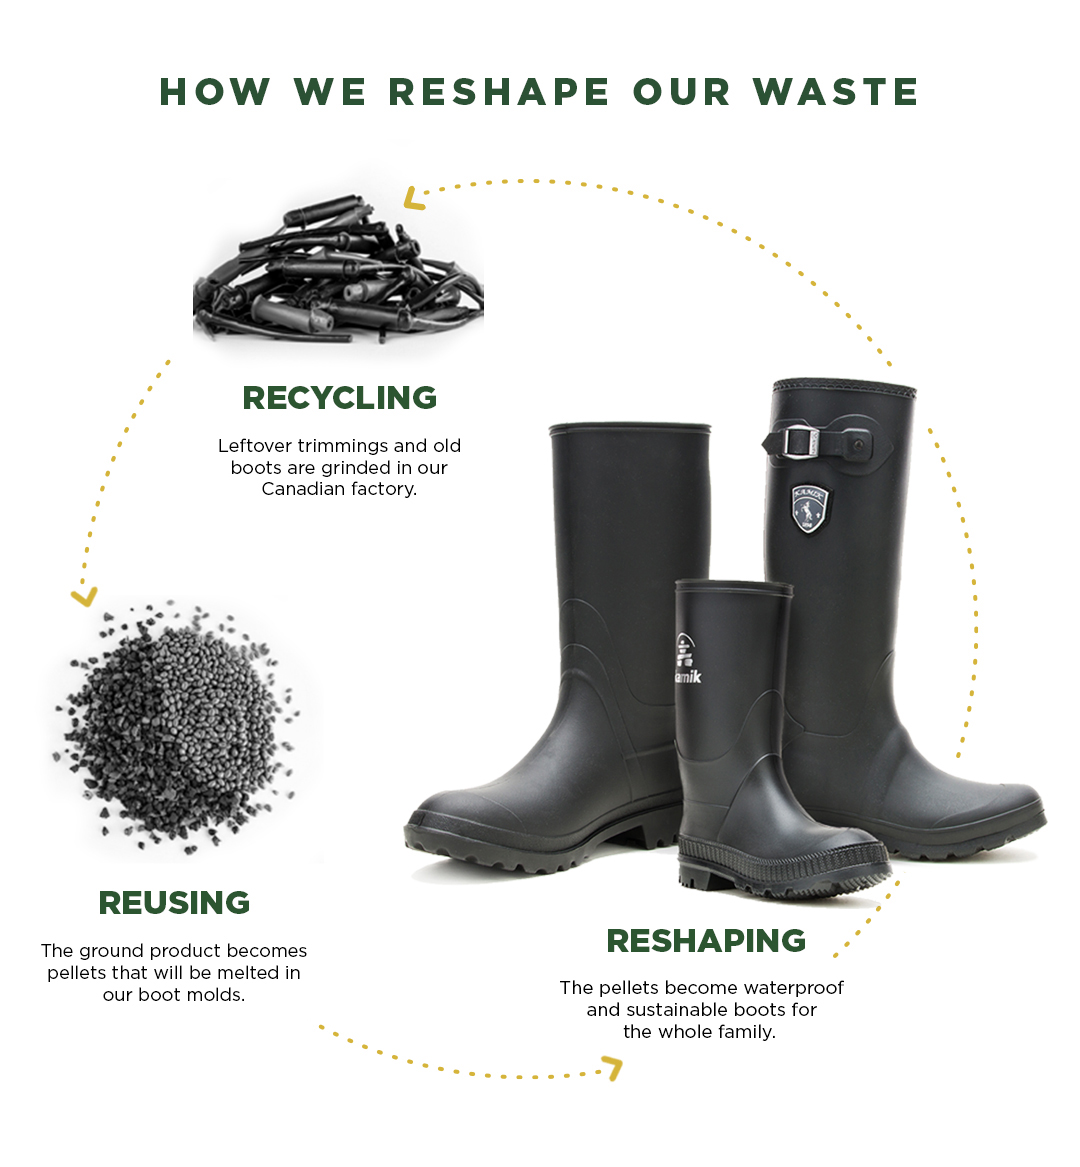 Recycling - Reusing - Reshaping